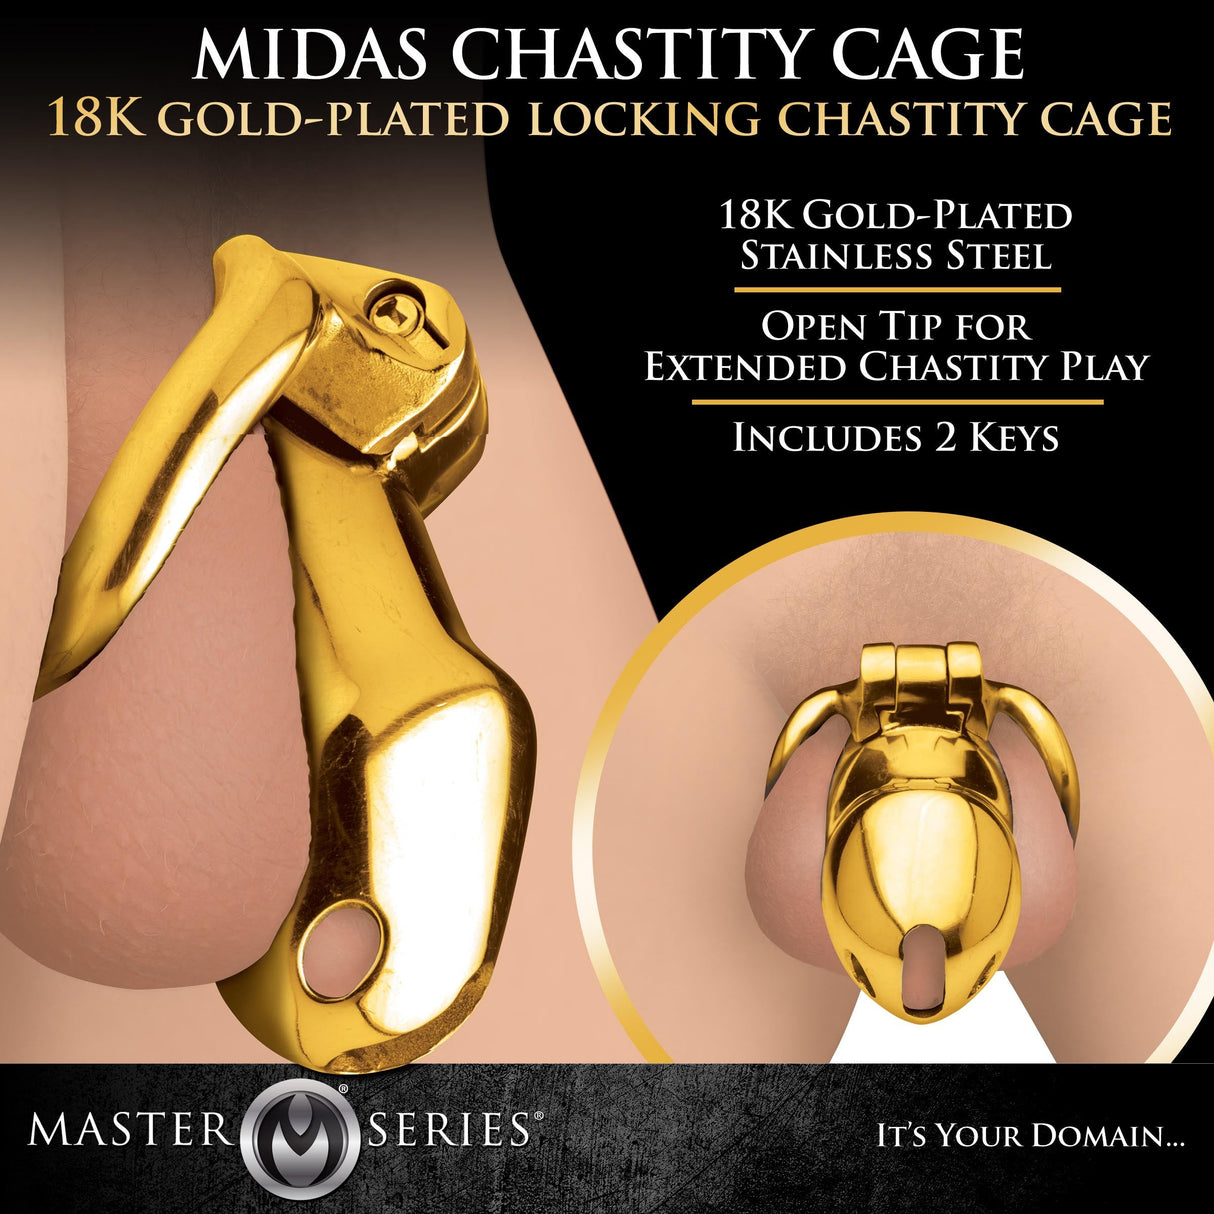 Midas 18K Gold-Plated Locking Chastity Cage